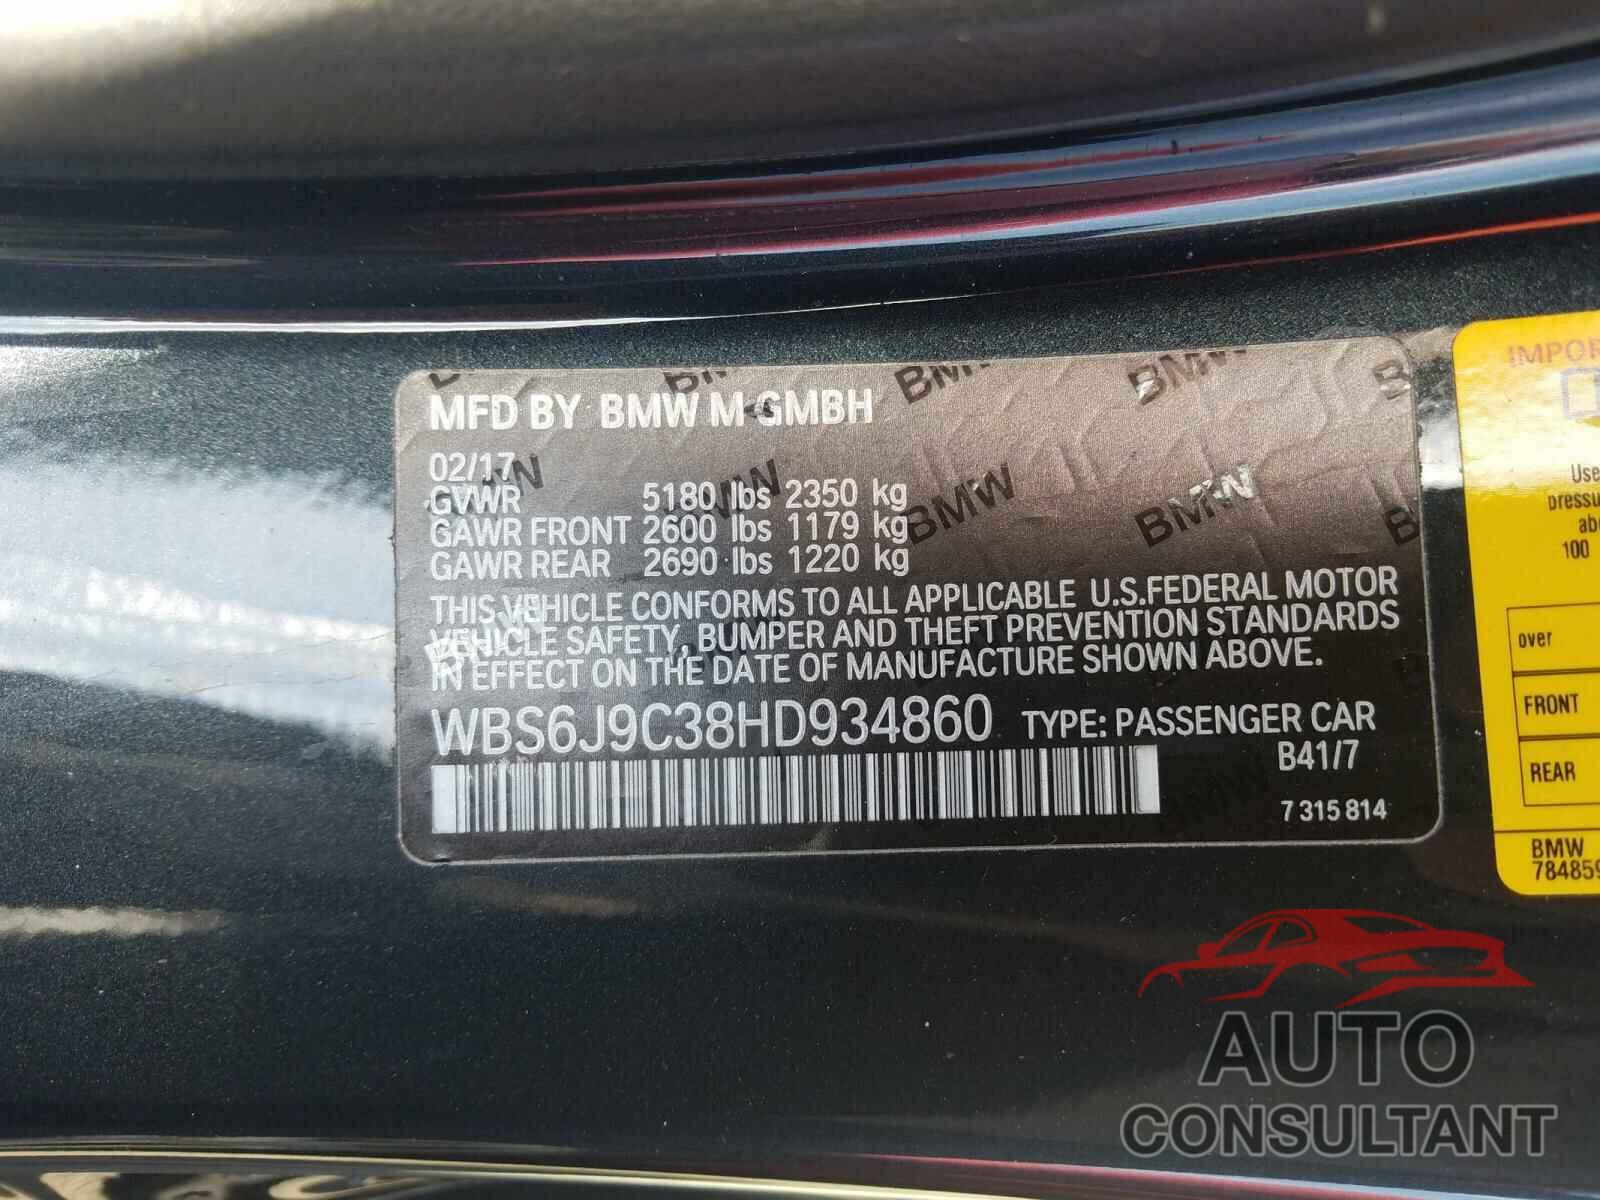 BMW M6 2017 - WBS6J9C38HD934860